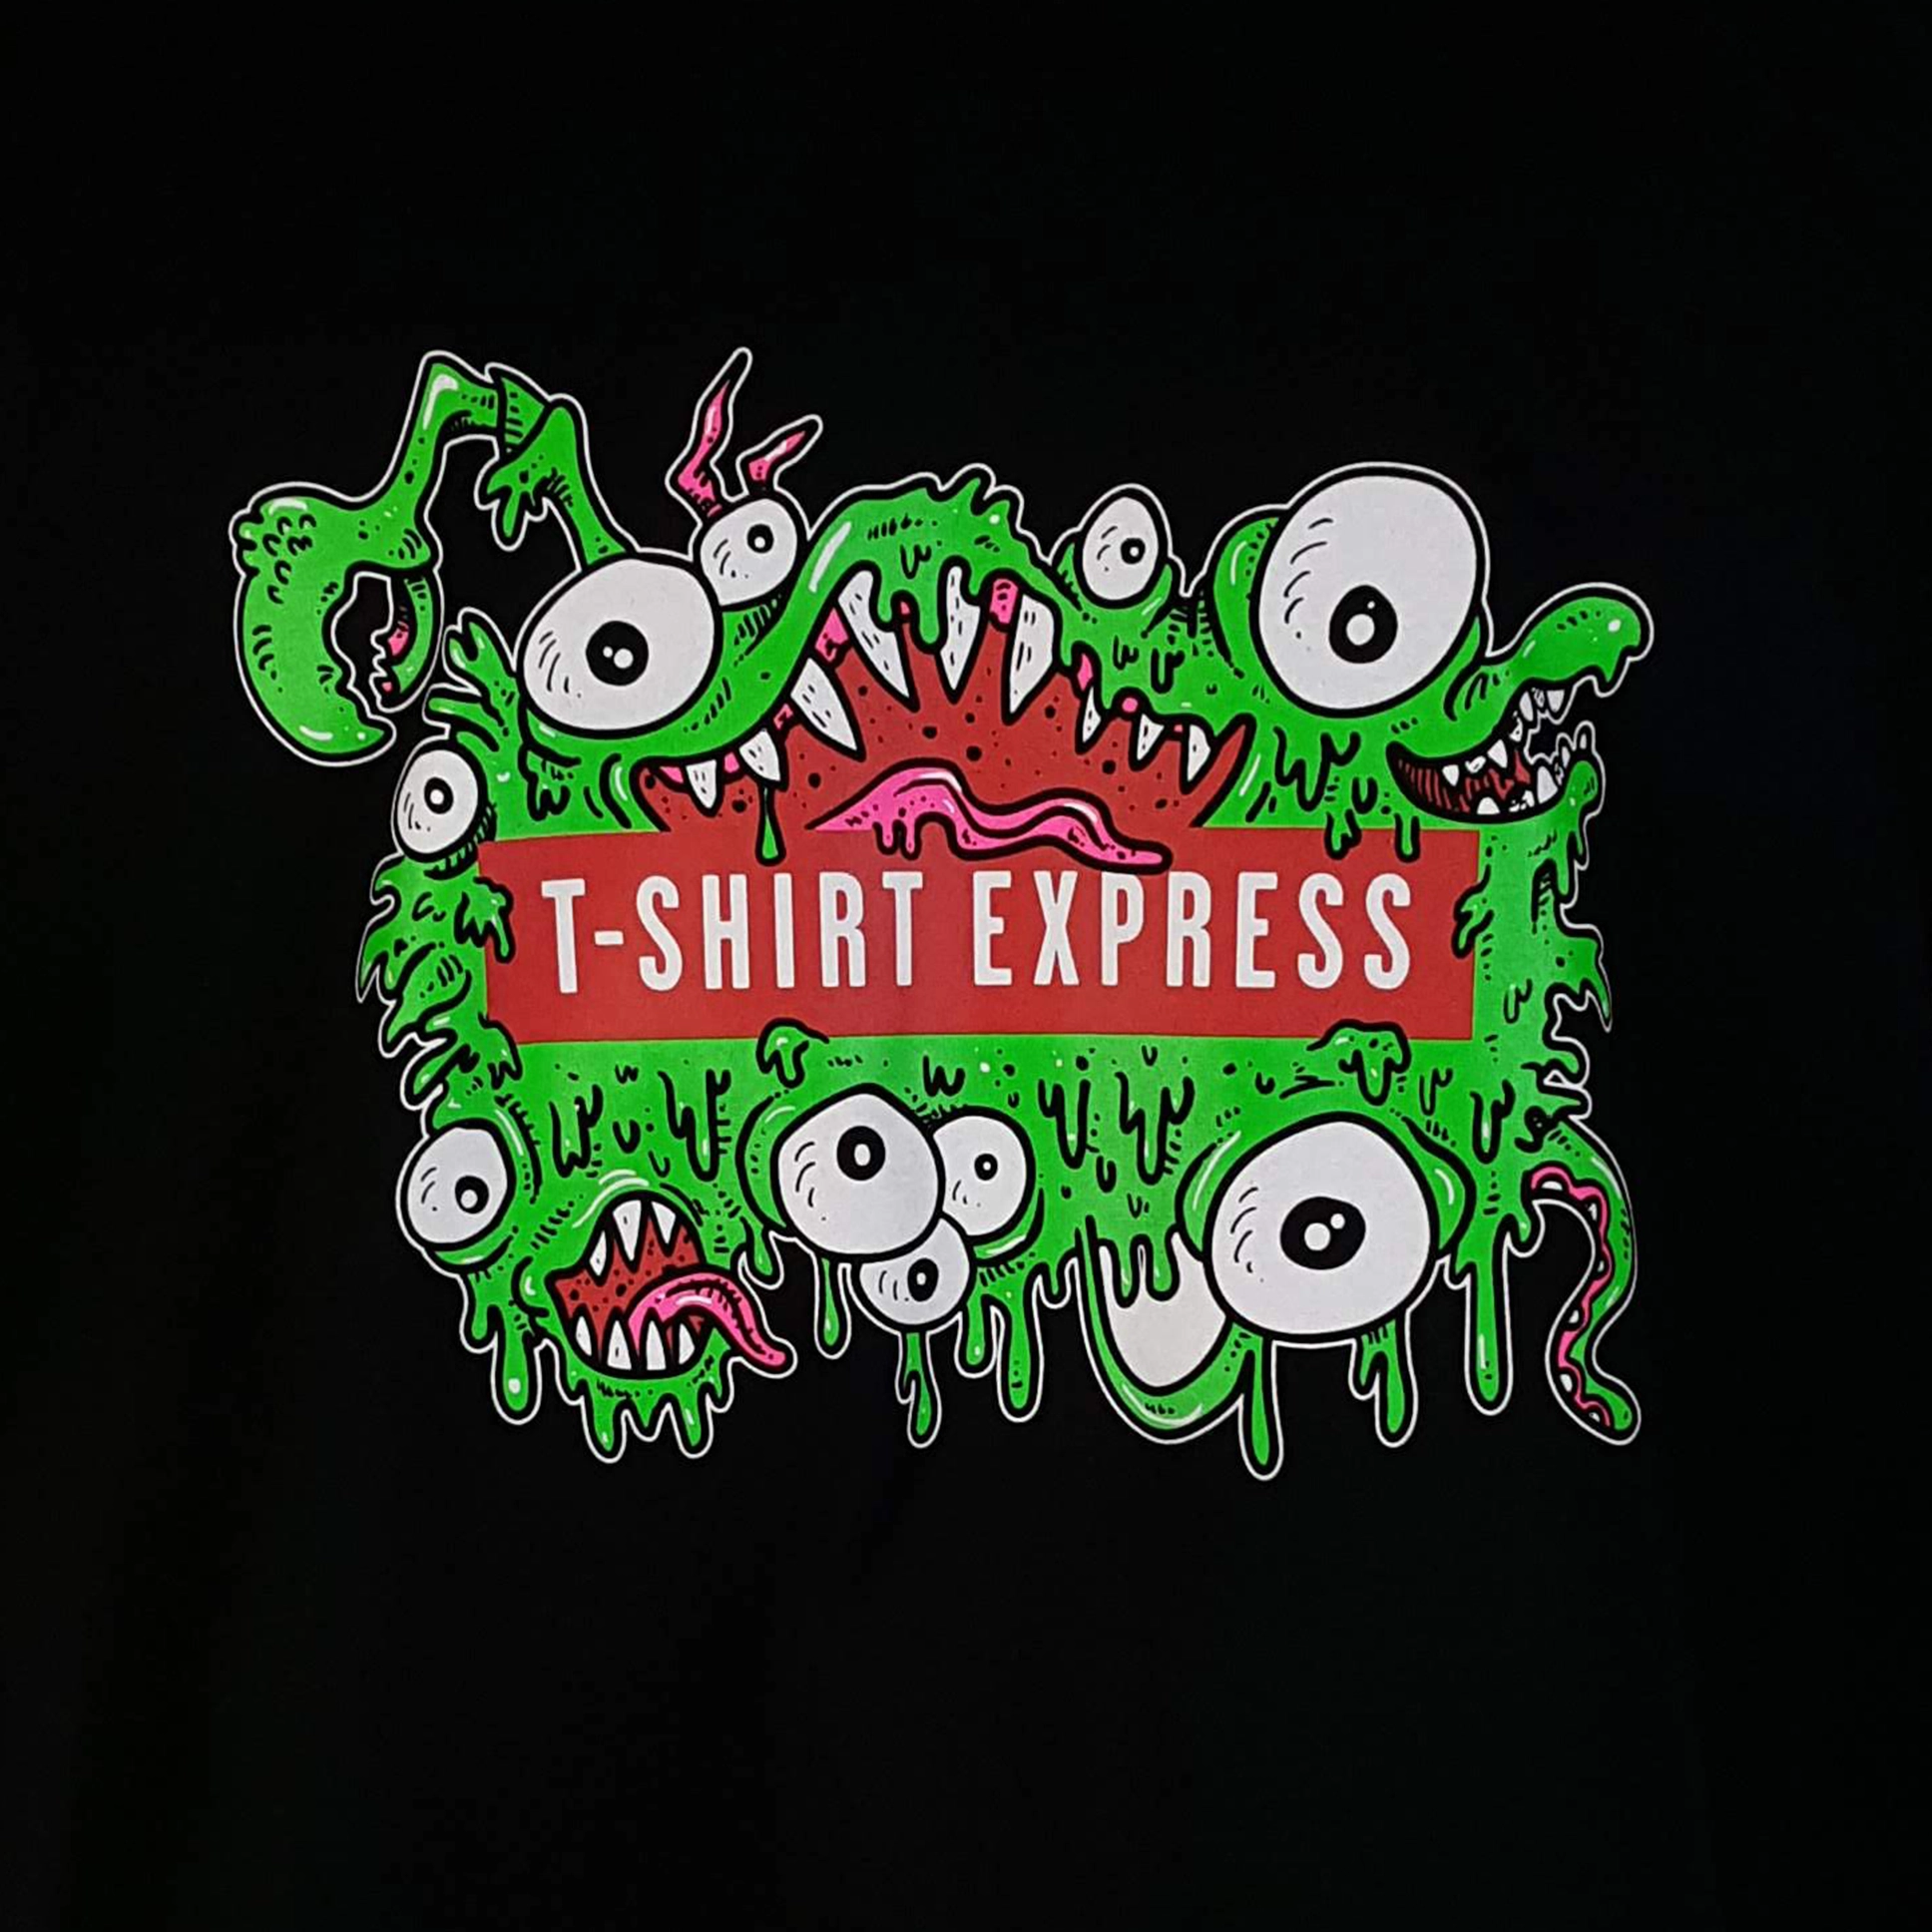 t-shirt express in Chili ohio